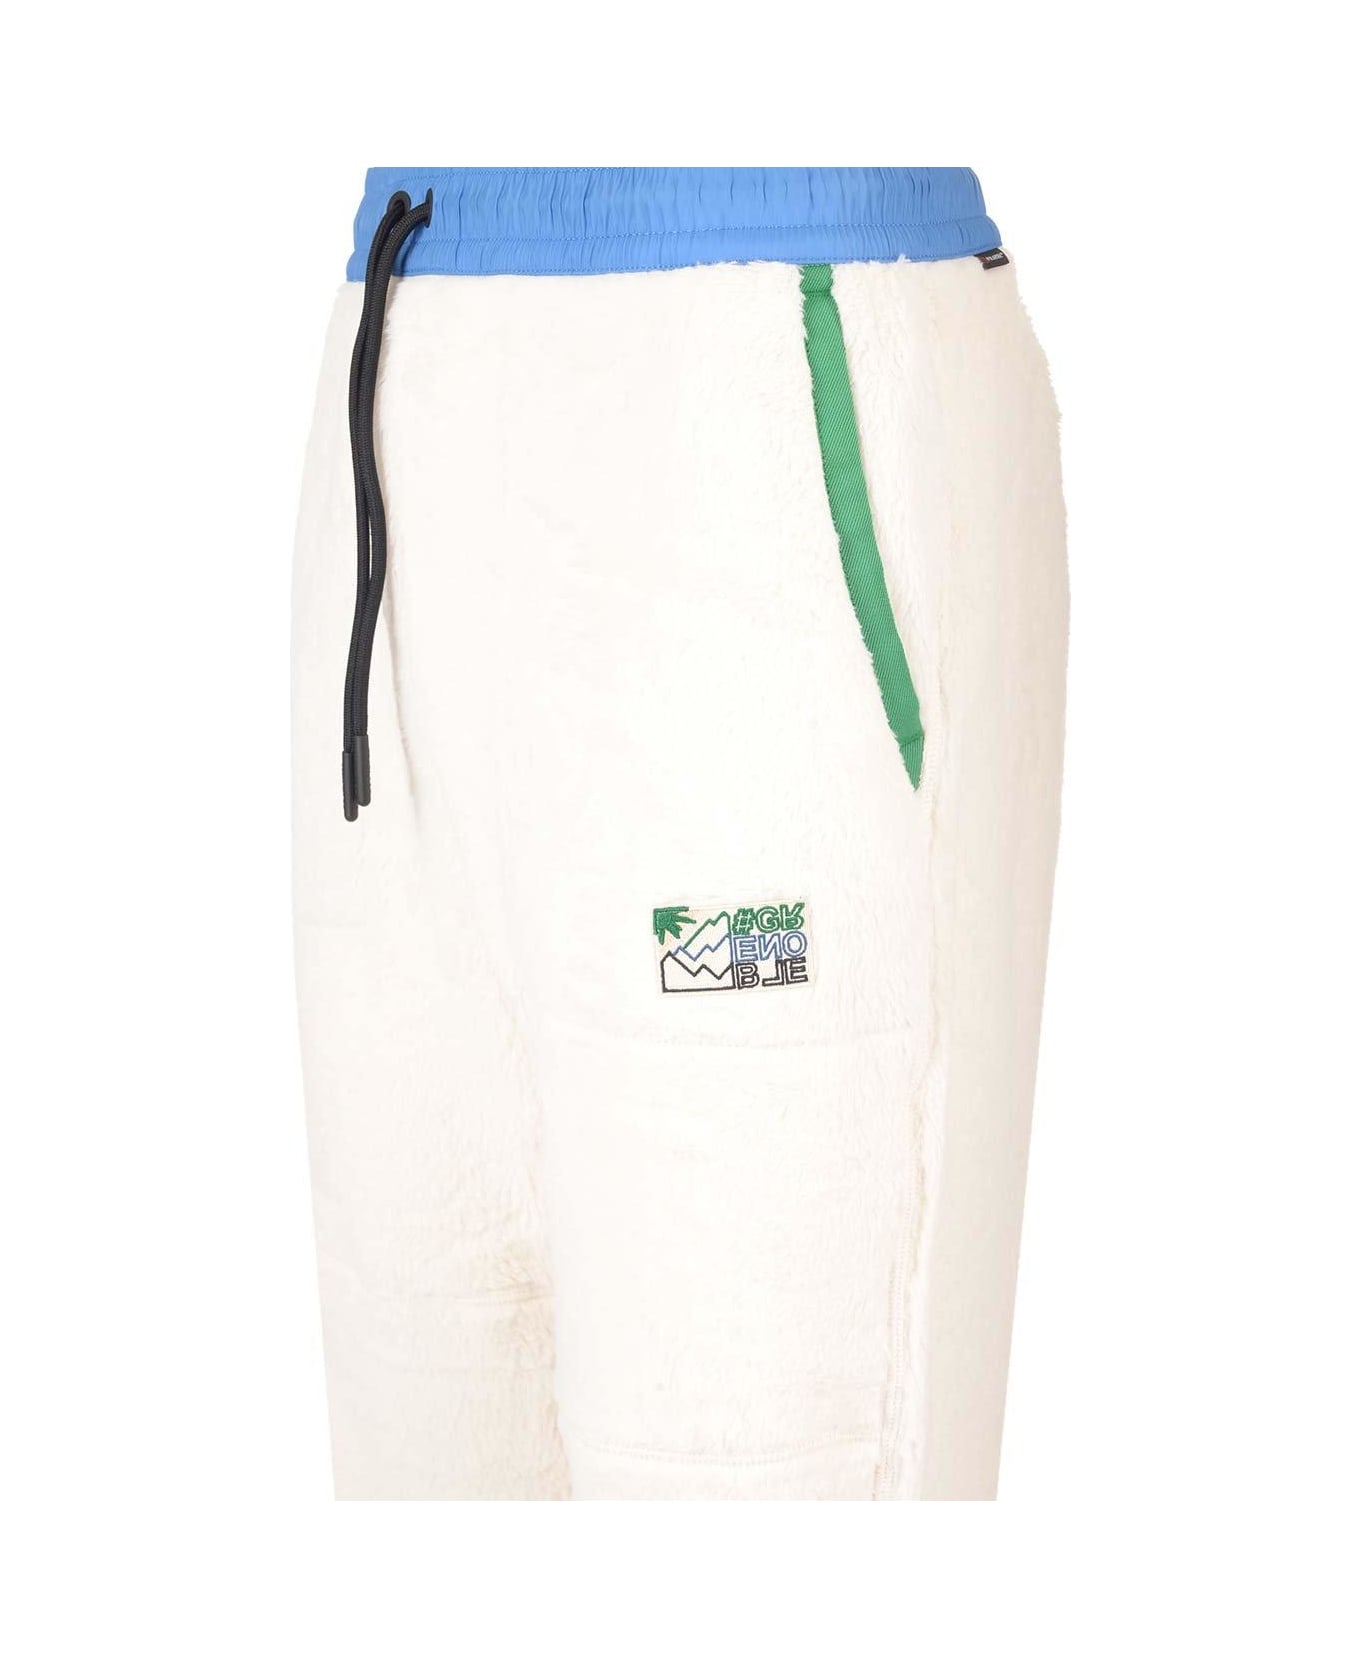 Moncler Grenoble Logo Patch Fleece Track Pants - White